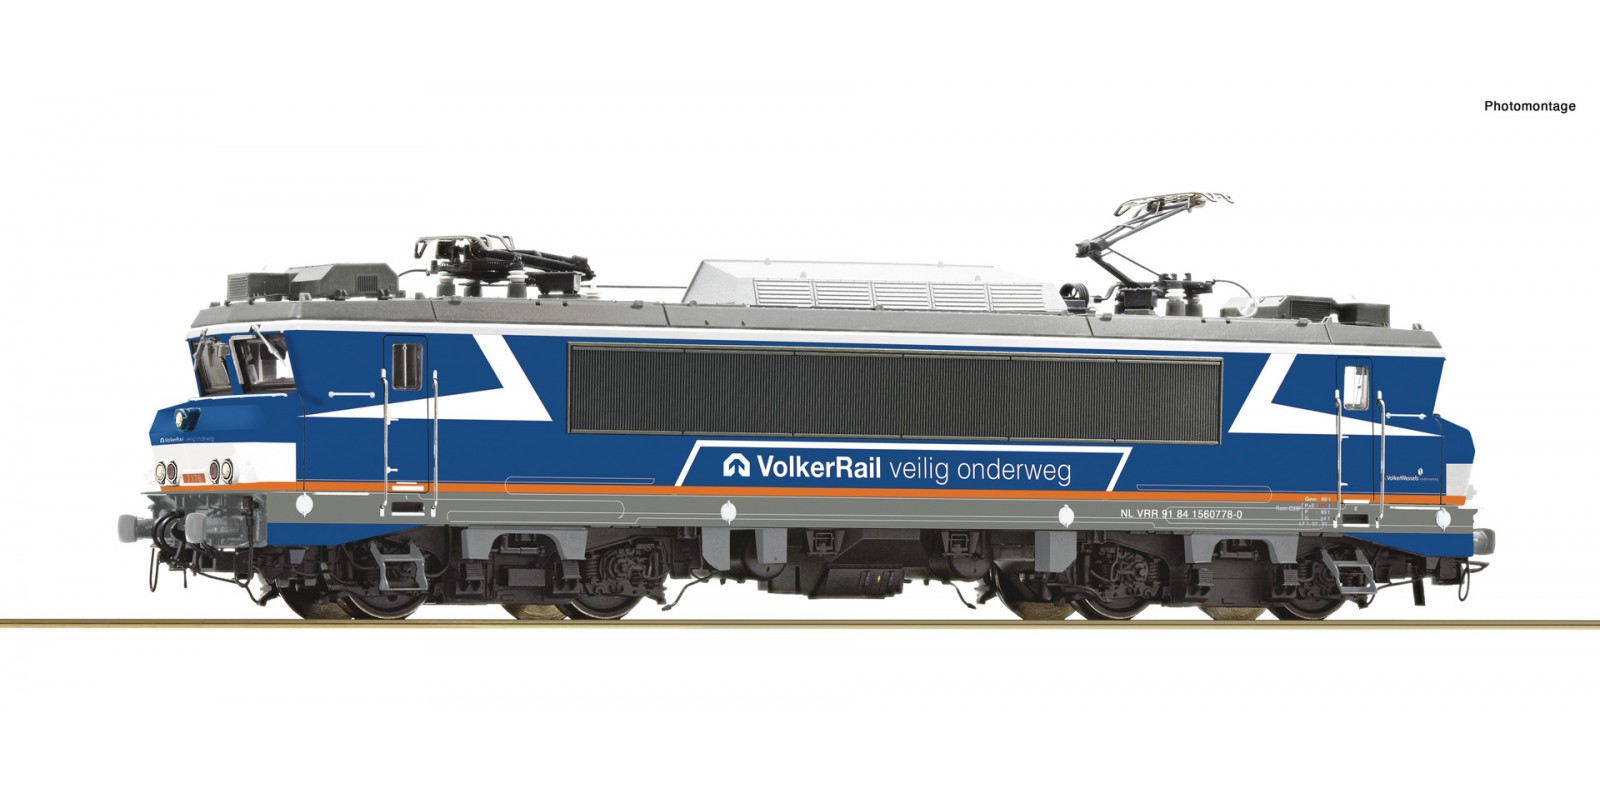 RO7510010 Electric locomotive 7178, VolkerRail